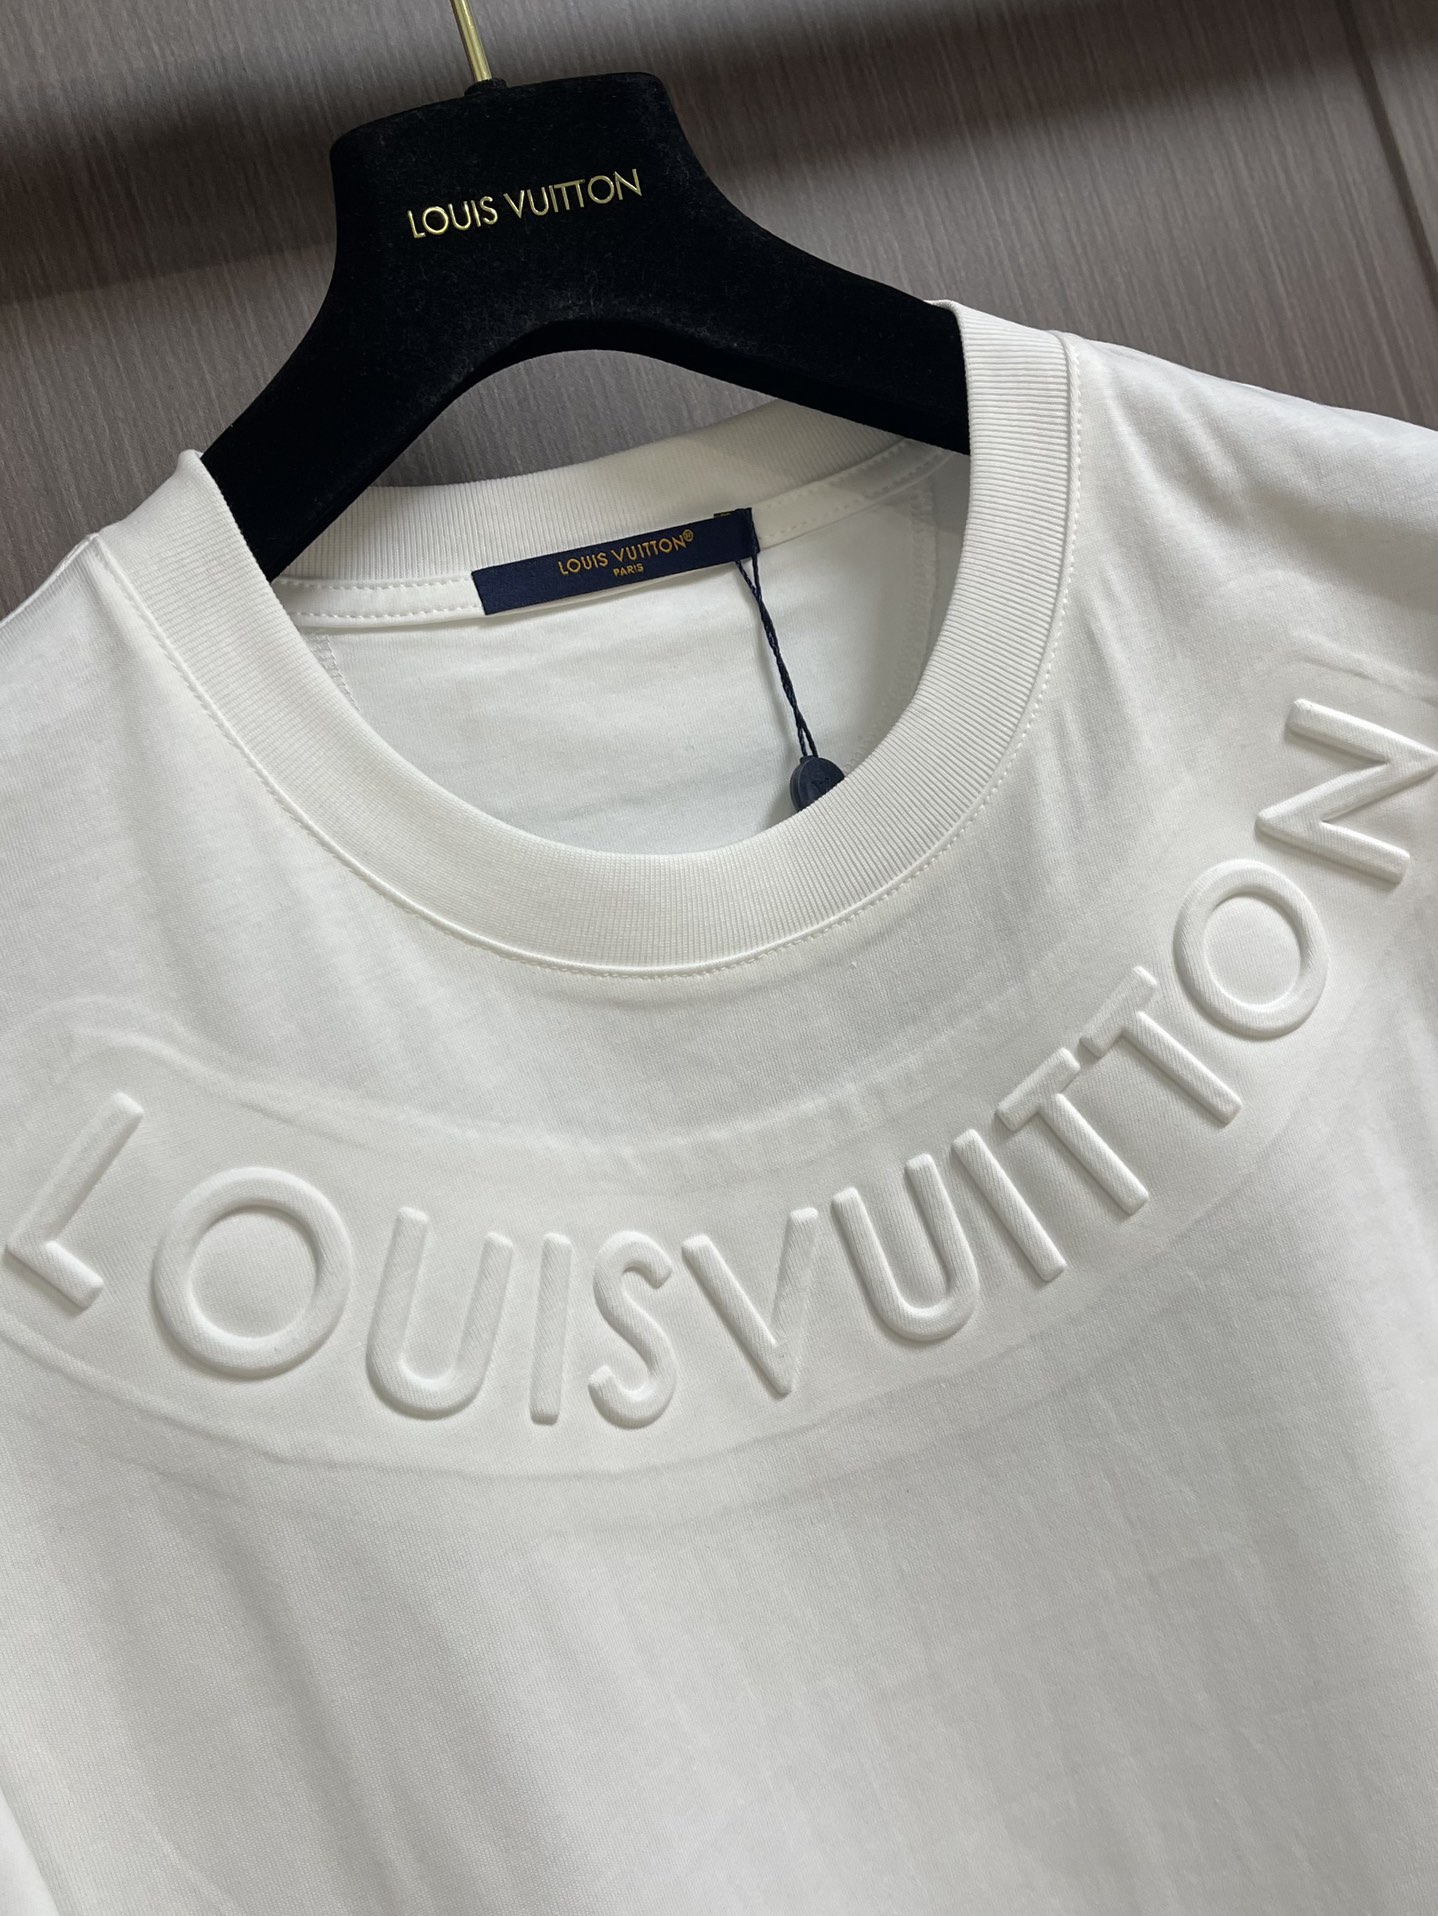 LV2024春夏新款短袖T恤标识logo图案凹凸压花修饰！区别于以往的不同宣示品牌传承多年的设计理念！其